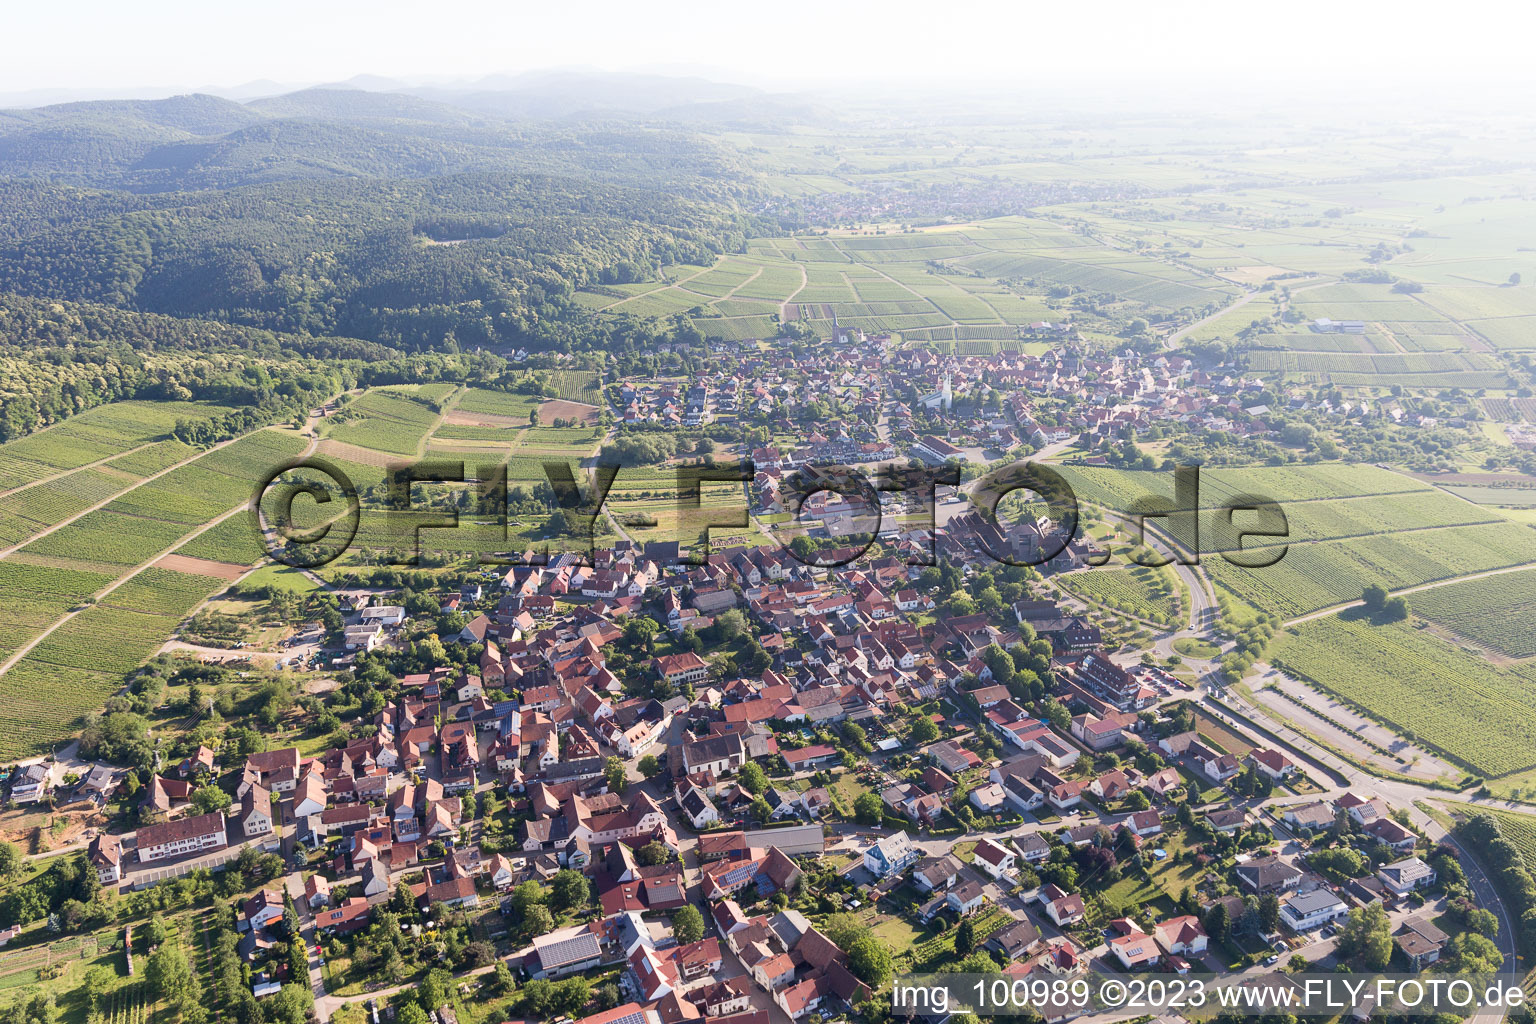 Image drone de Quartier Schweigen in Schweigen-Rechtenbach dans le département Rhénanie-Palatinat, Allemagne